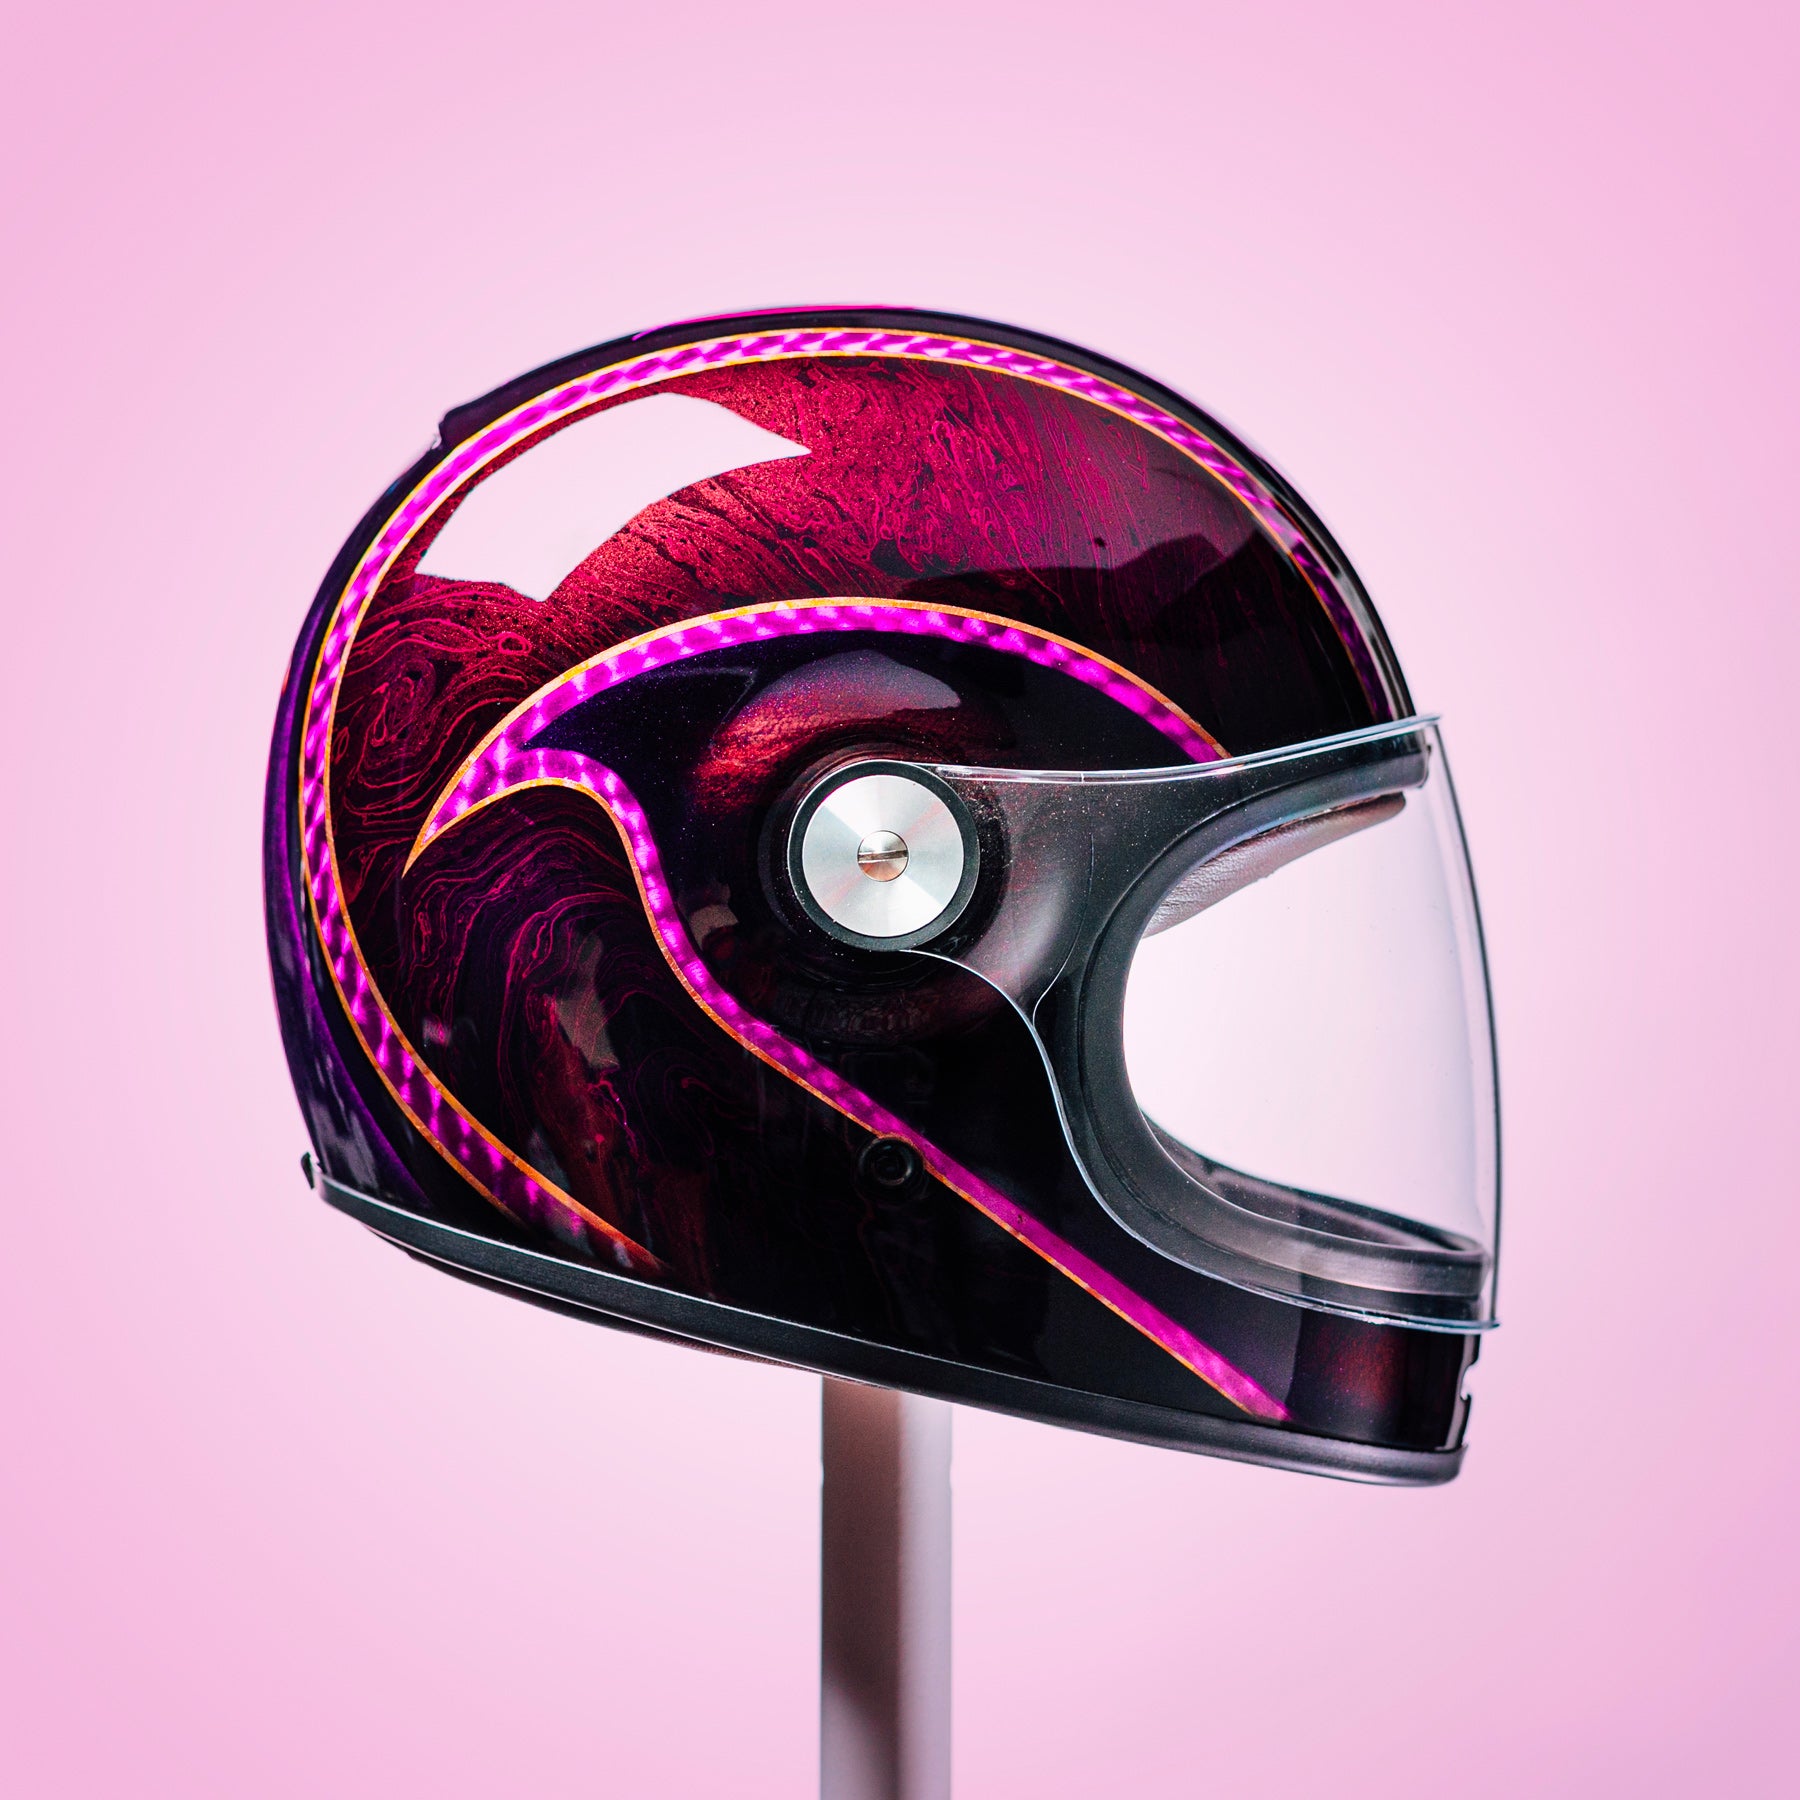 Trippy Ten helmet art show Pittsburgh Glory Daze motorcycle show Kurt Alexa Diserio Bell Helmets Seth Chaney